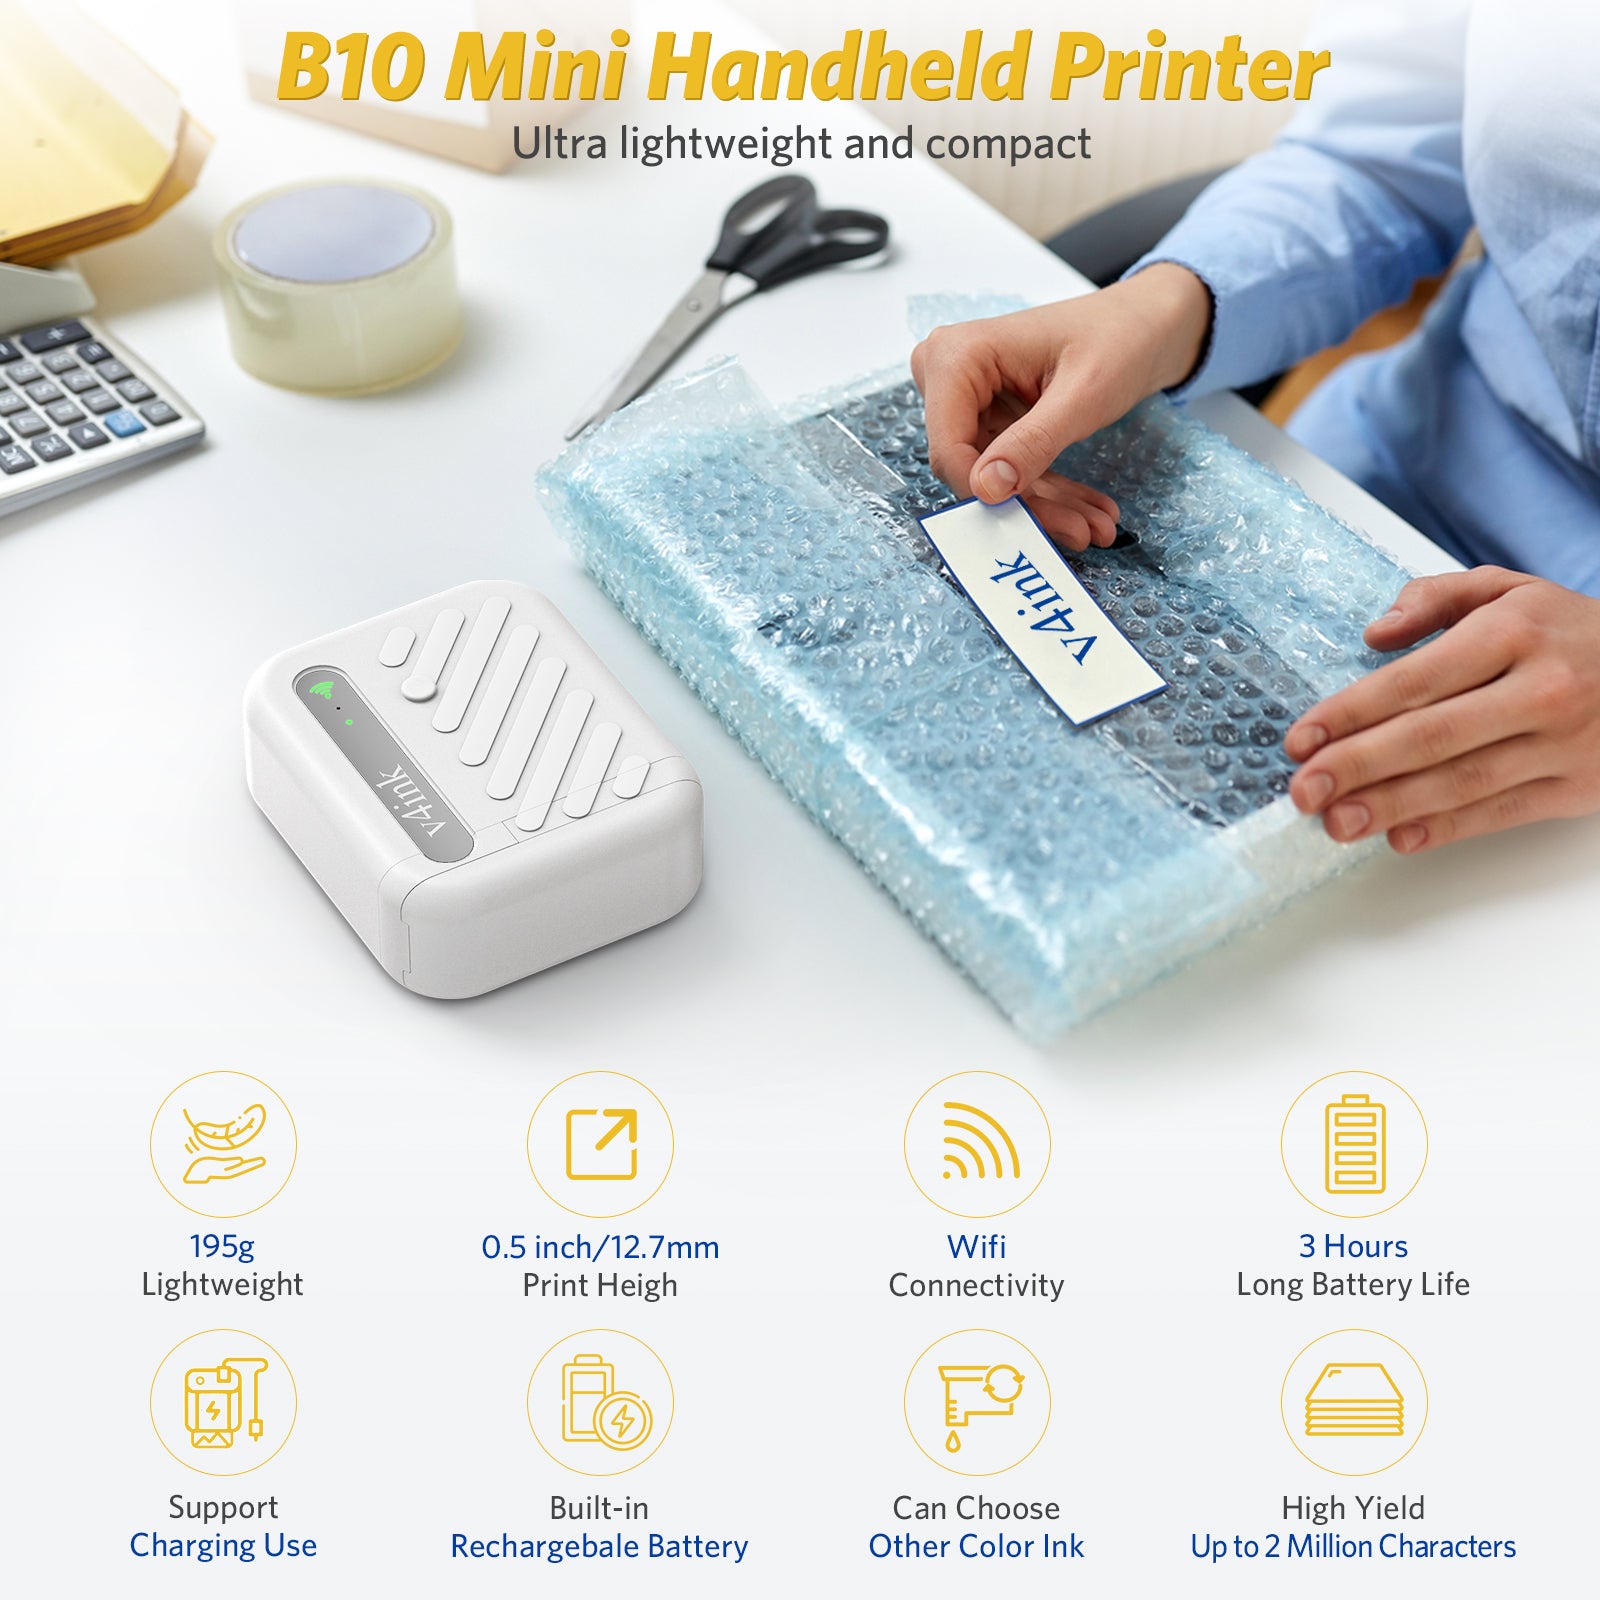 Key features of B10 mini portable inkjet printer